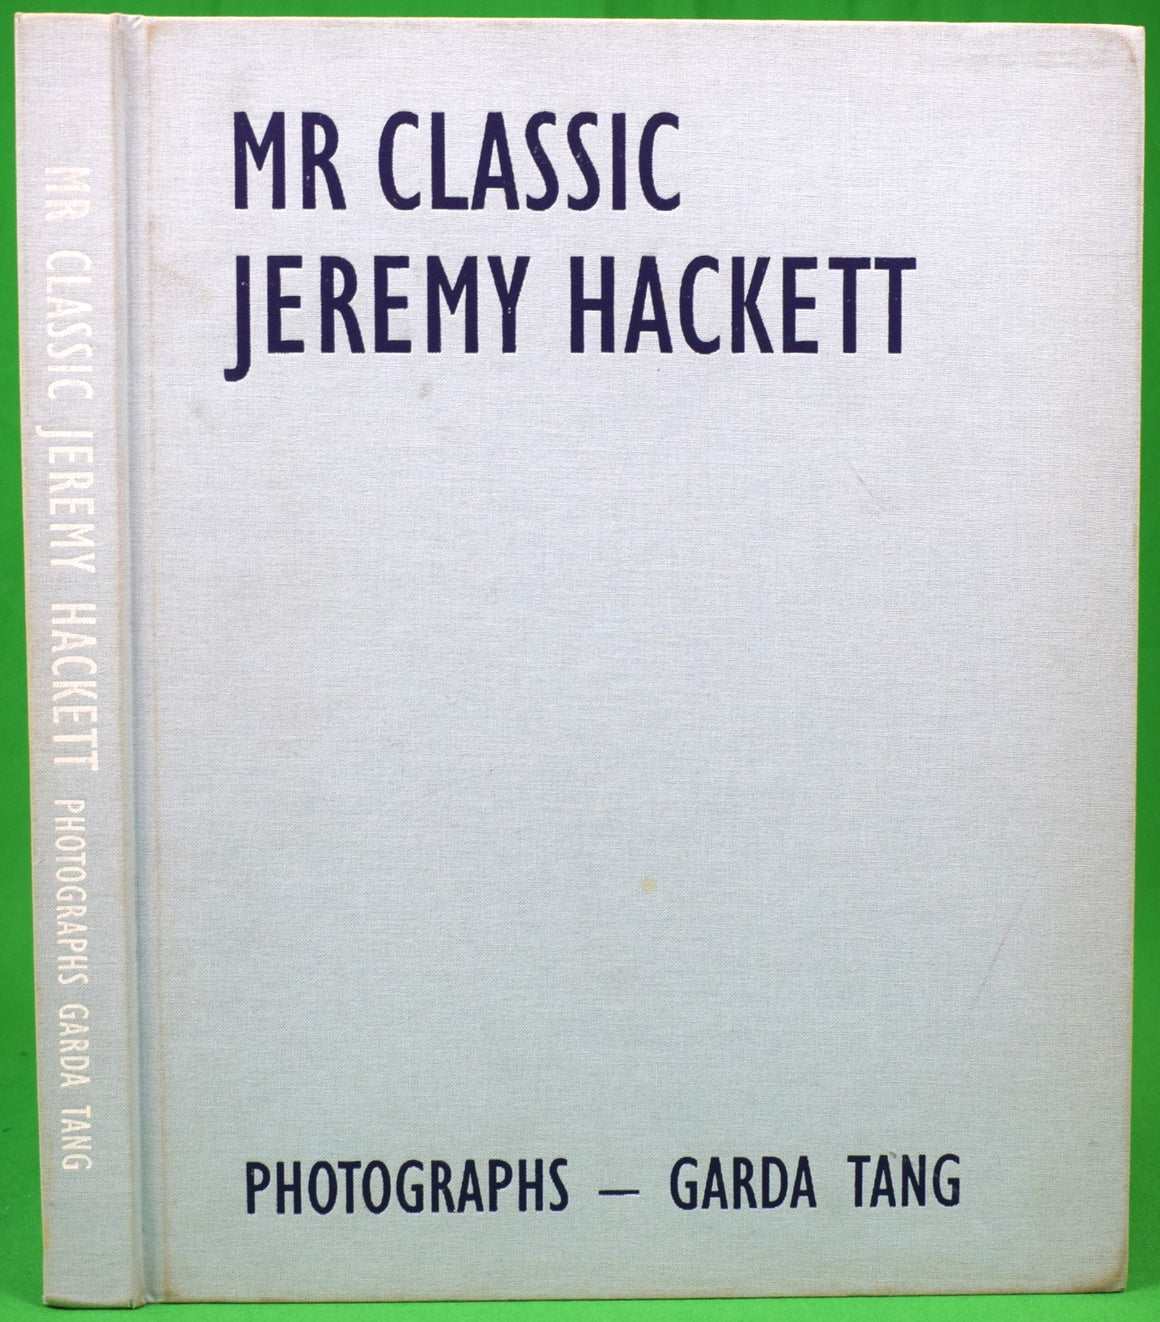 "Mr Classic Jeremy Hackett" 2008